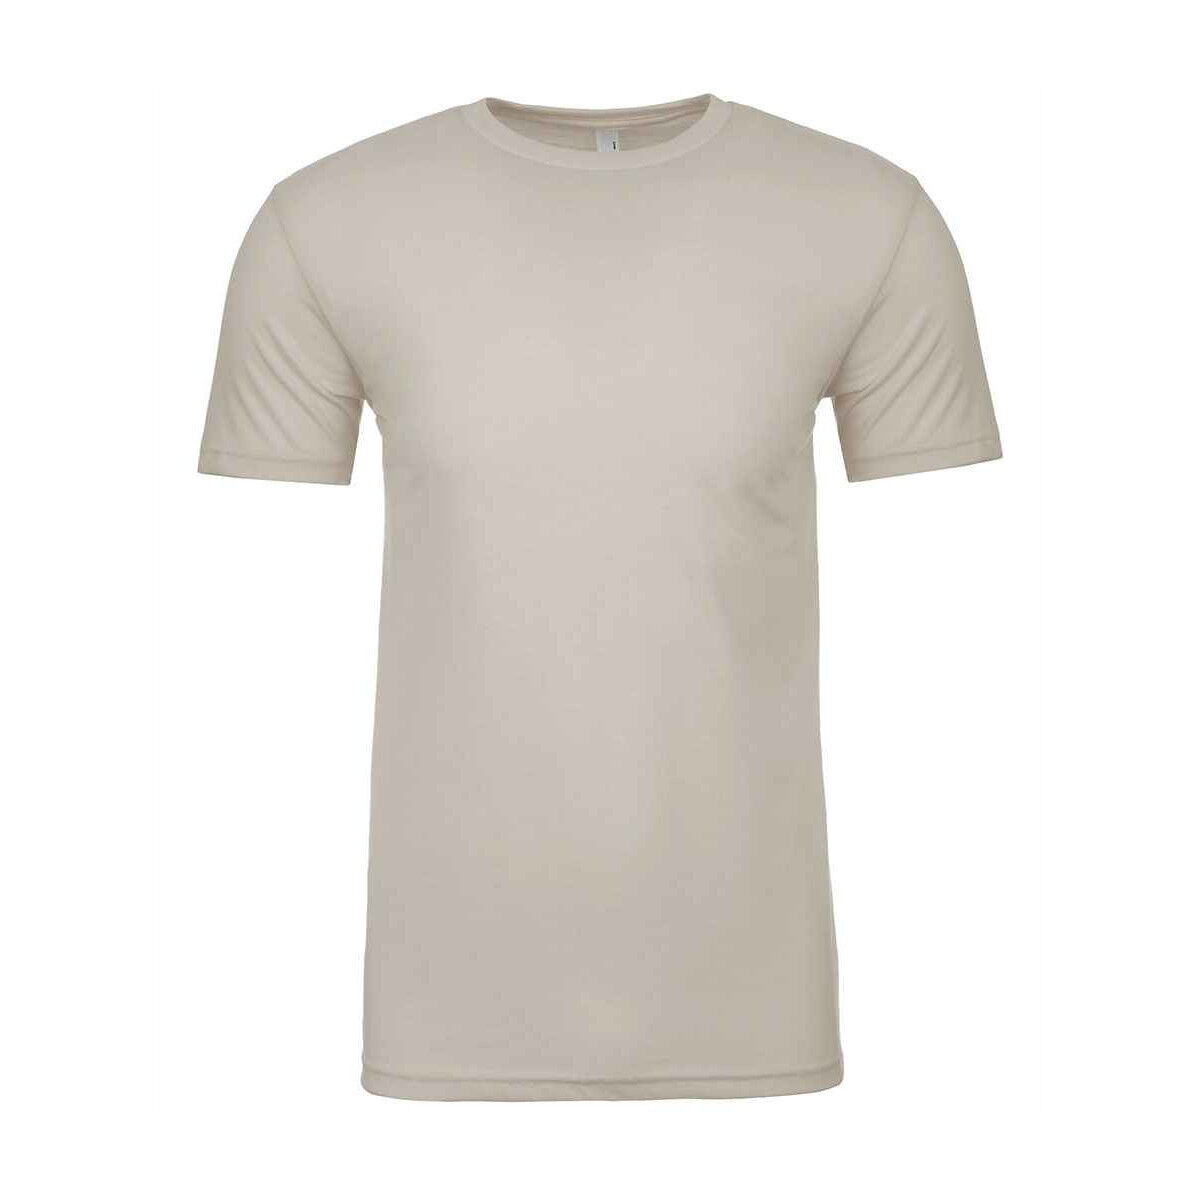 Next Level Unisex Sueded T-Shirt